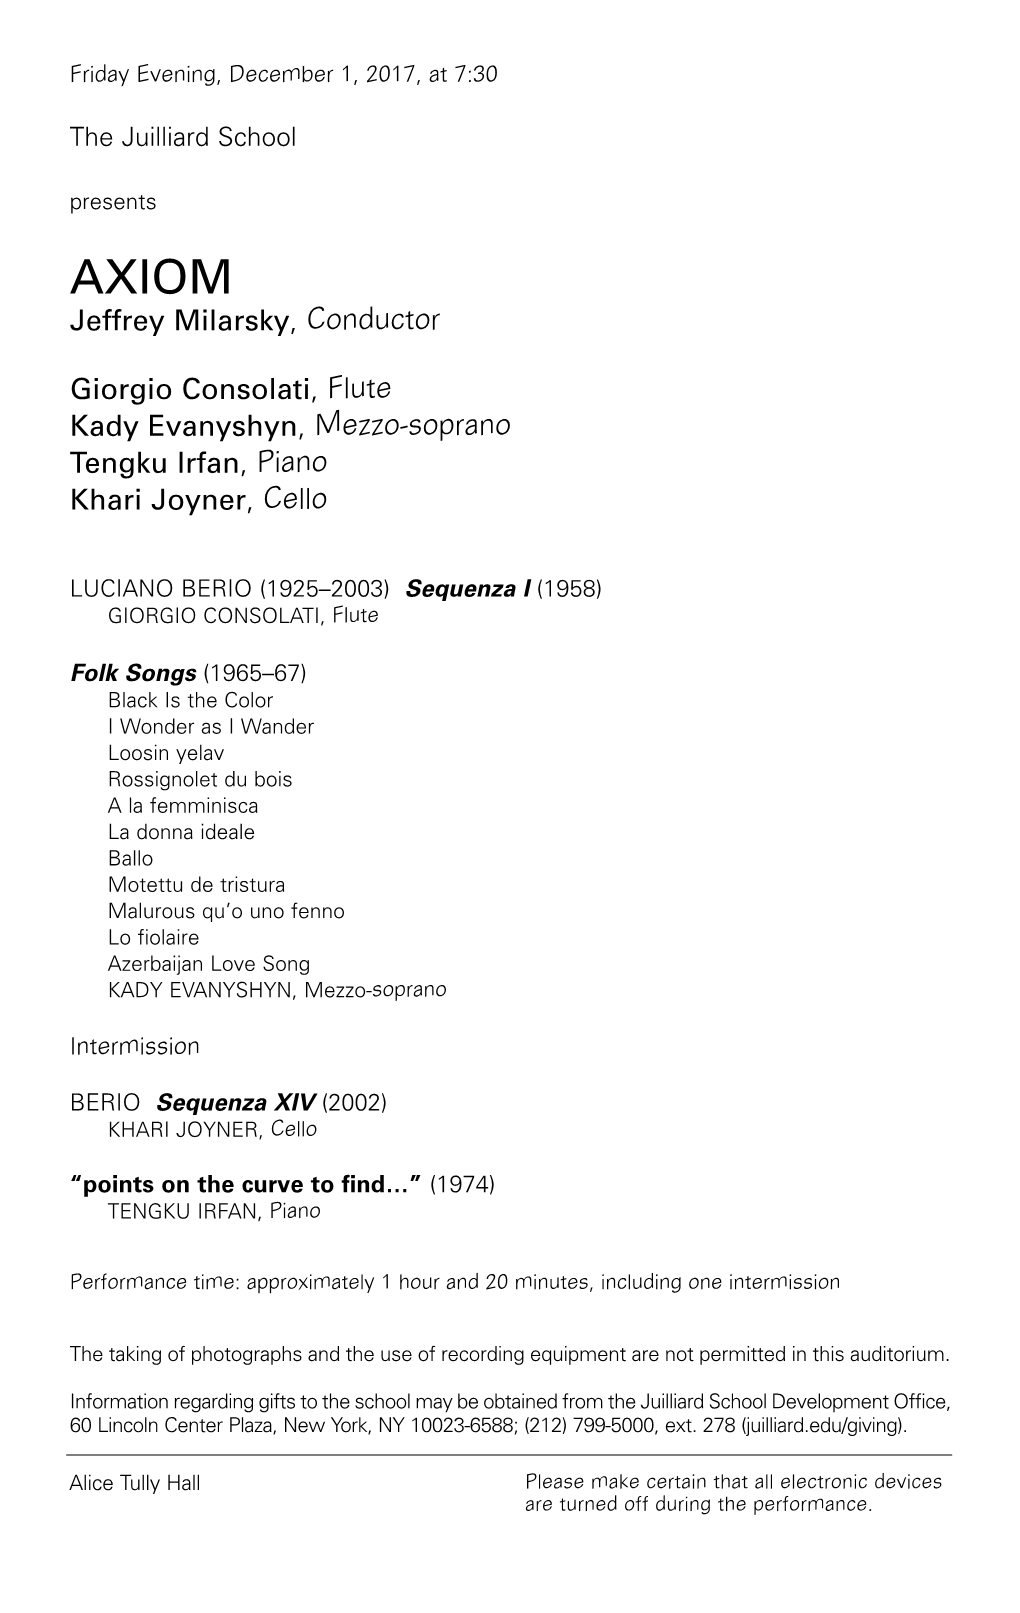 Jeffrey Milarsky, Conductor Giorgio Consolati, Flute Kady Evanyshyn